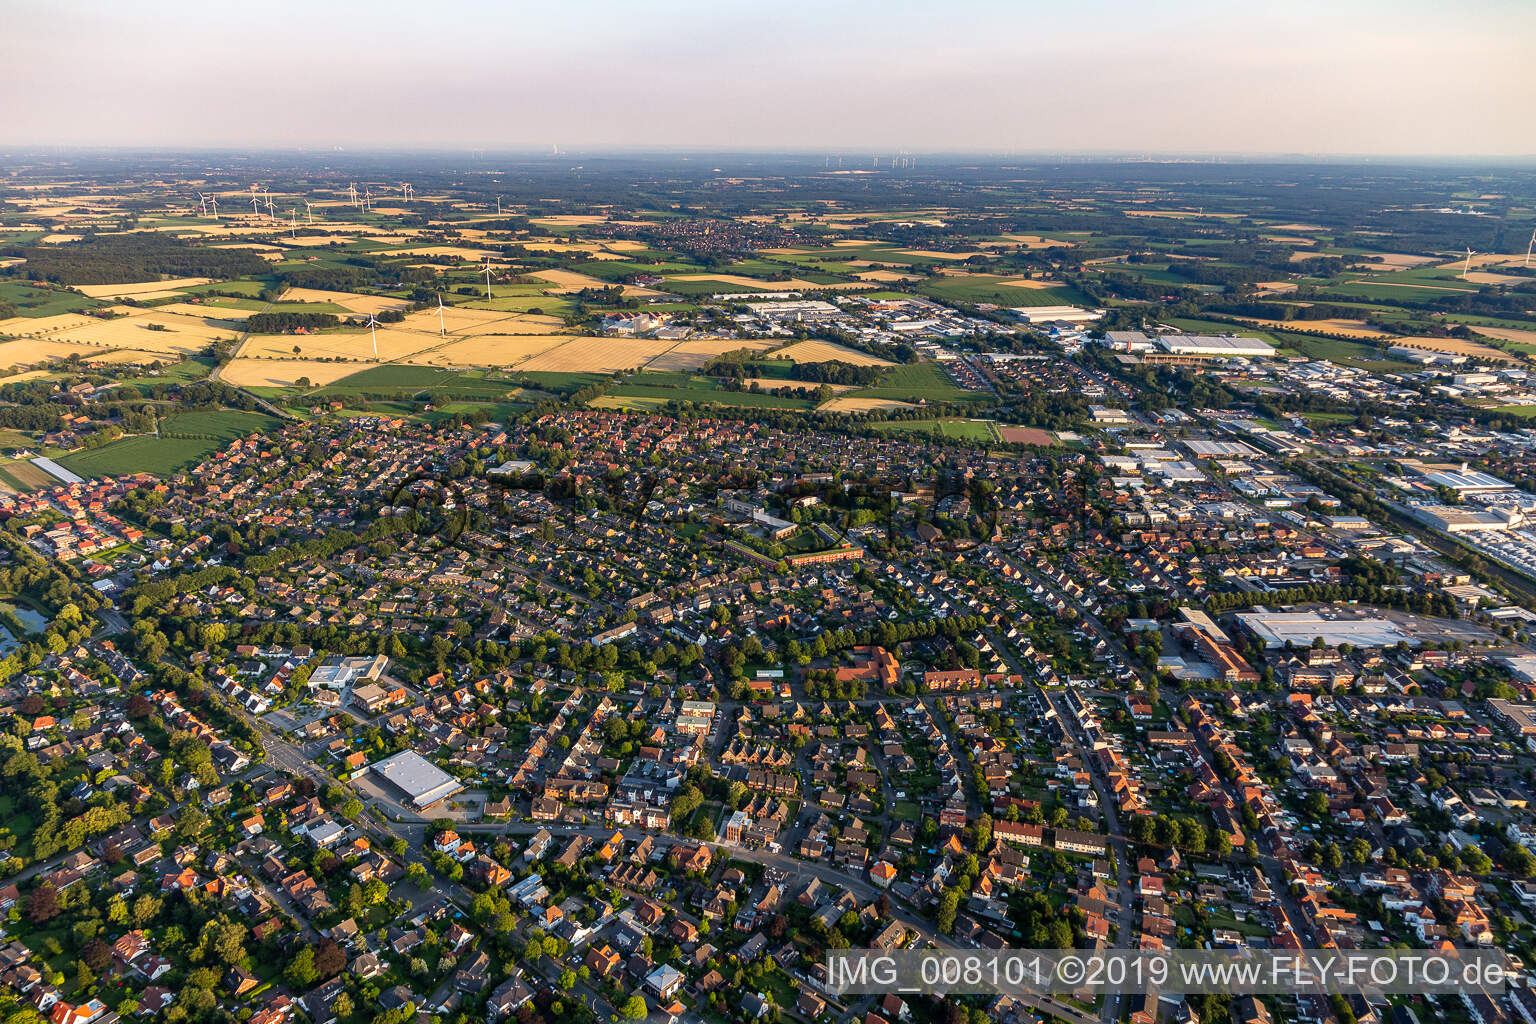 Coesfeld in the state North Rhine-Westphalia, Germany from the plane